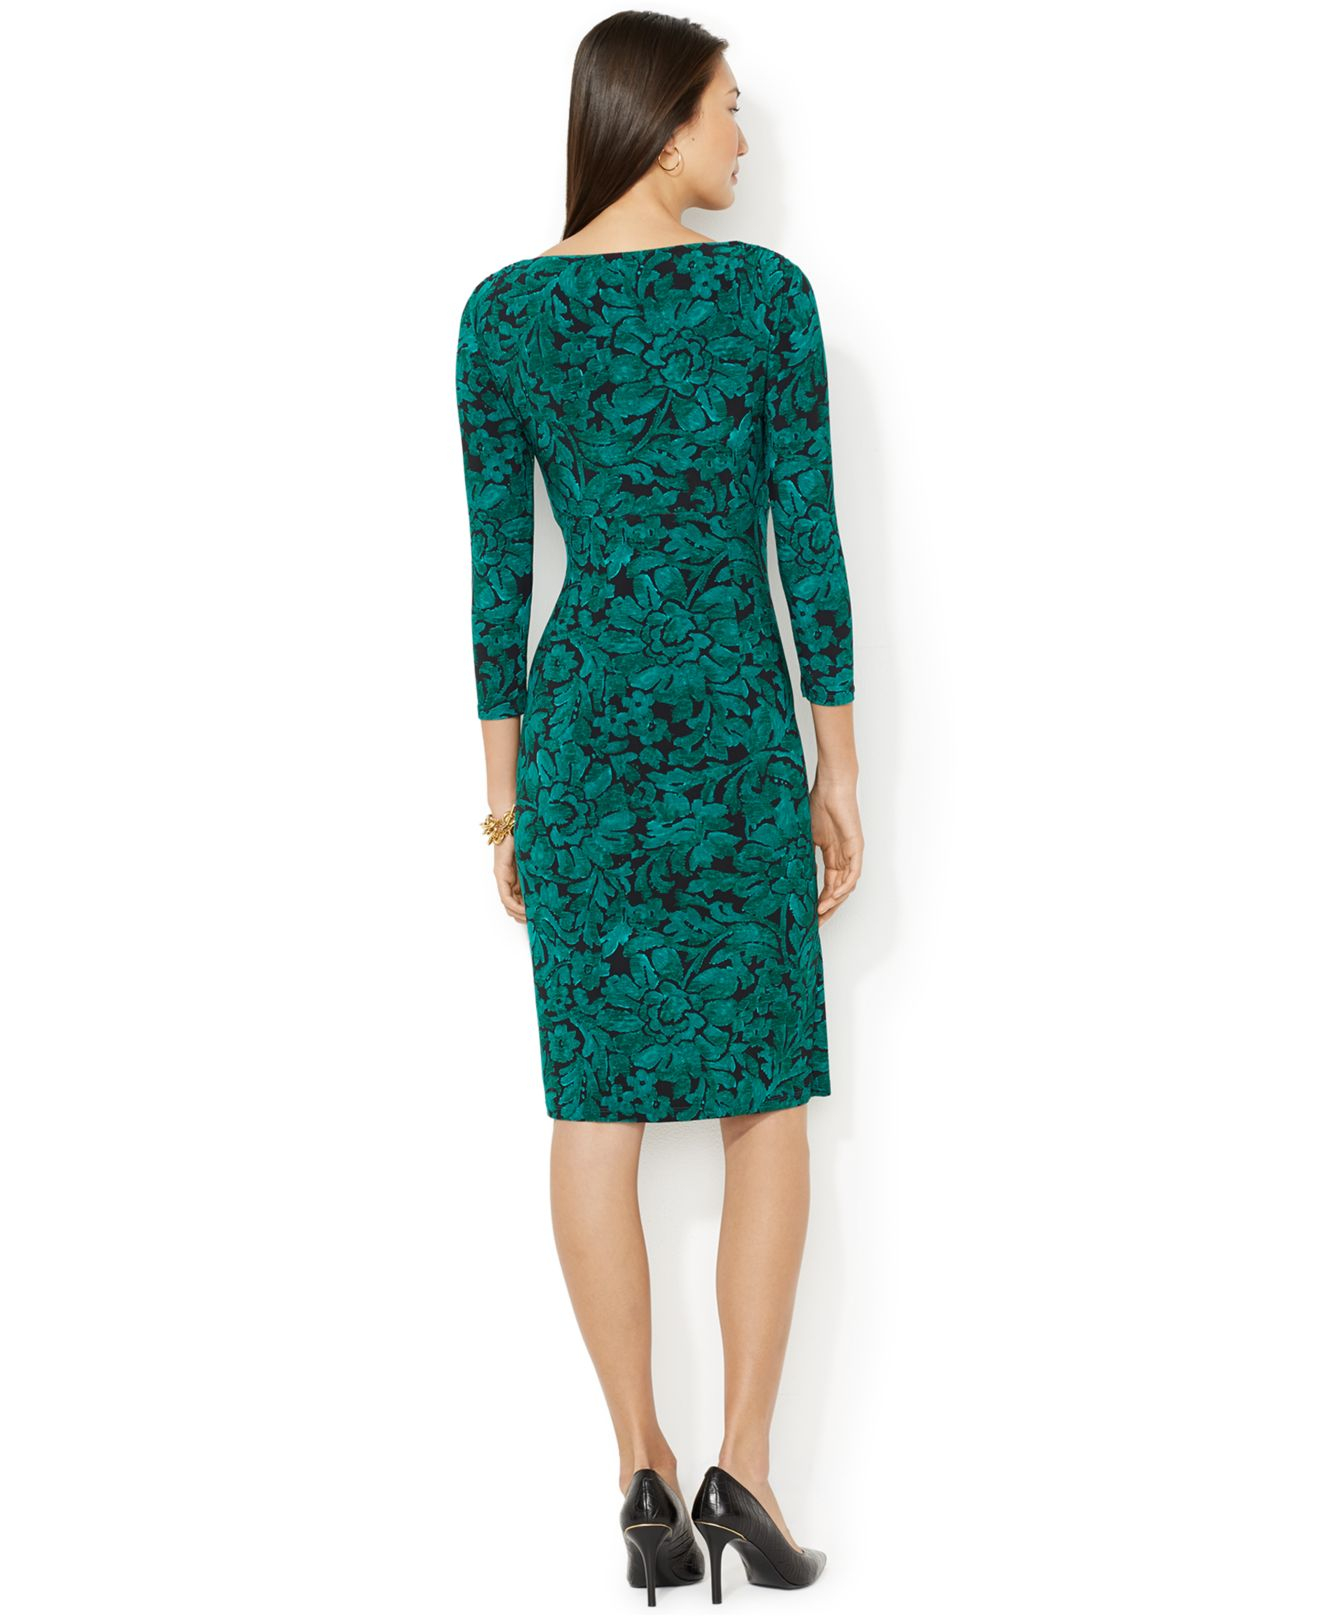 Lyst - Lauren By Ralph Lauren Floral-Print Faux-Wrap Dress in Green